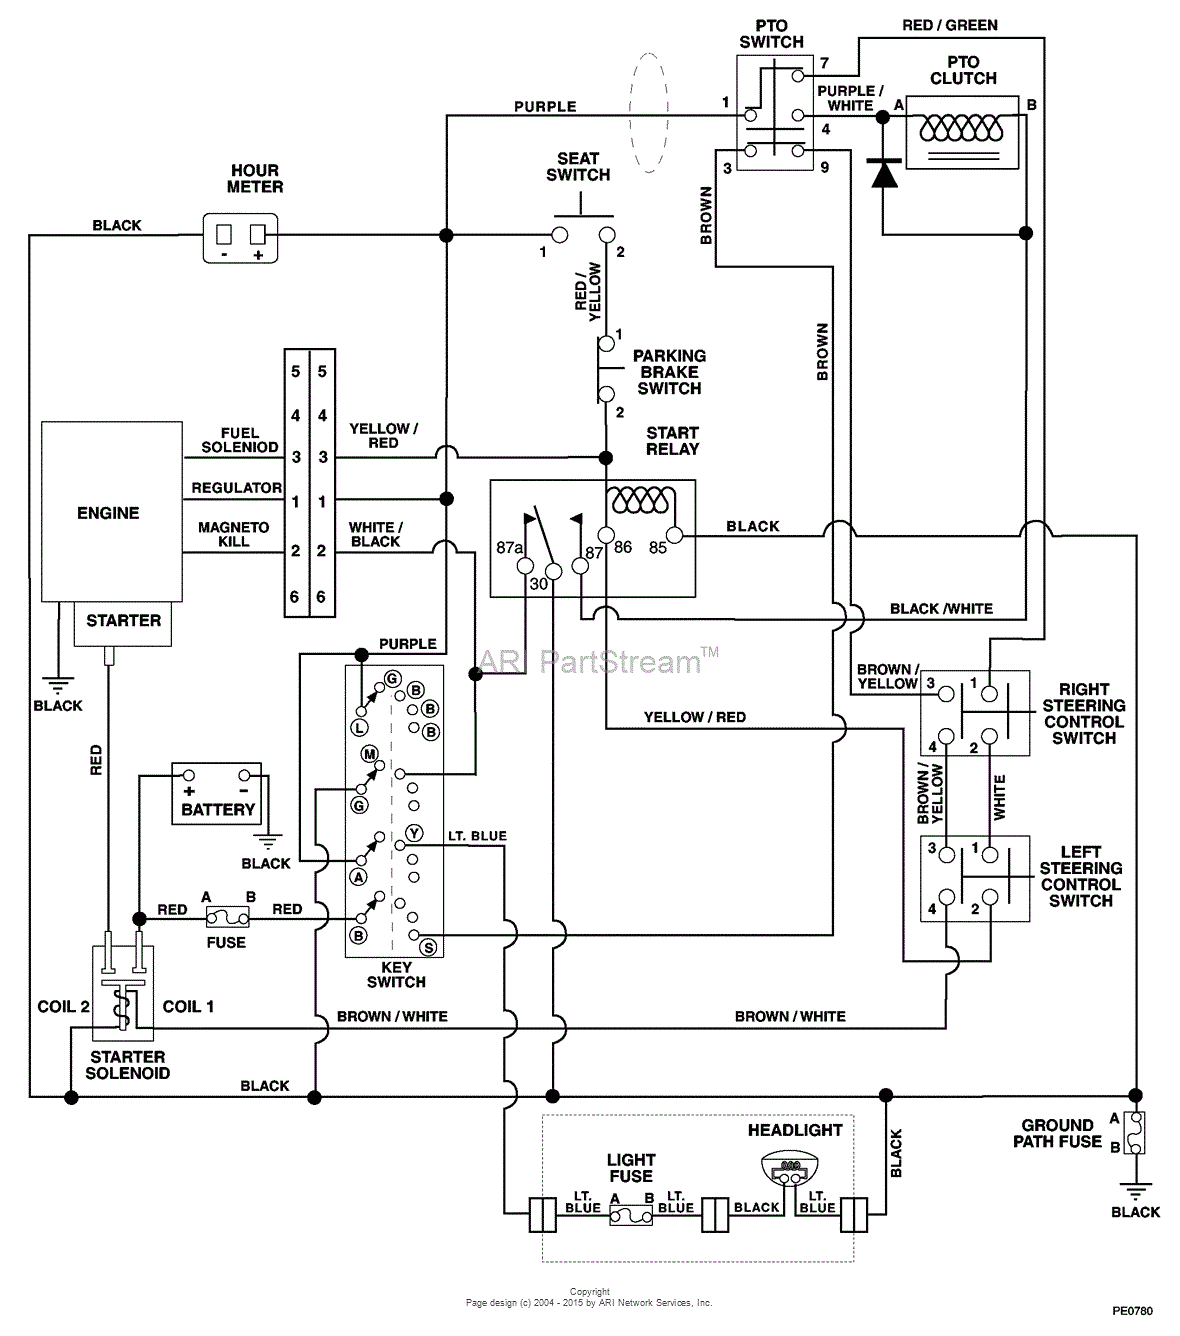 index 73 amplifier circuit circuit diagram seekiccom wiring full bridge convertor basiccircuit circuit diagram seekiccom index